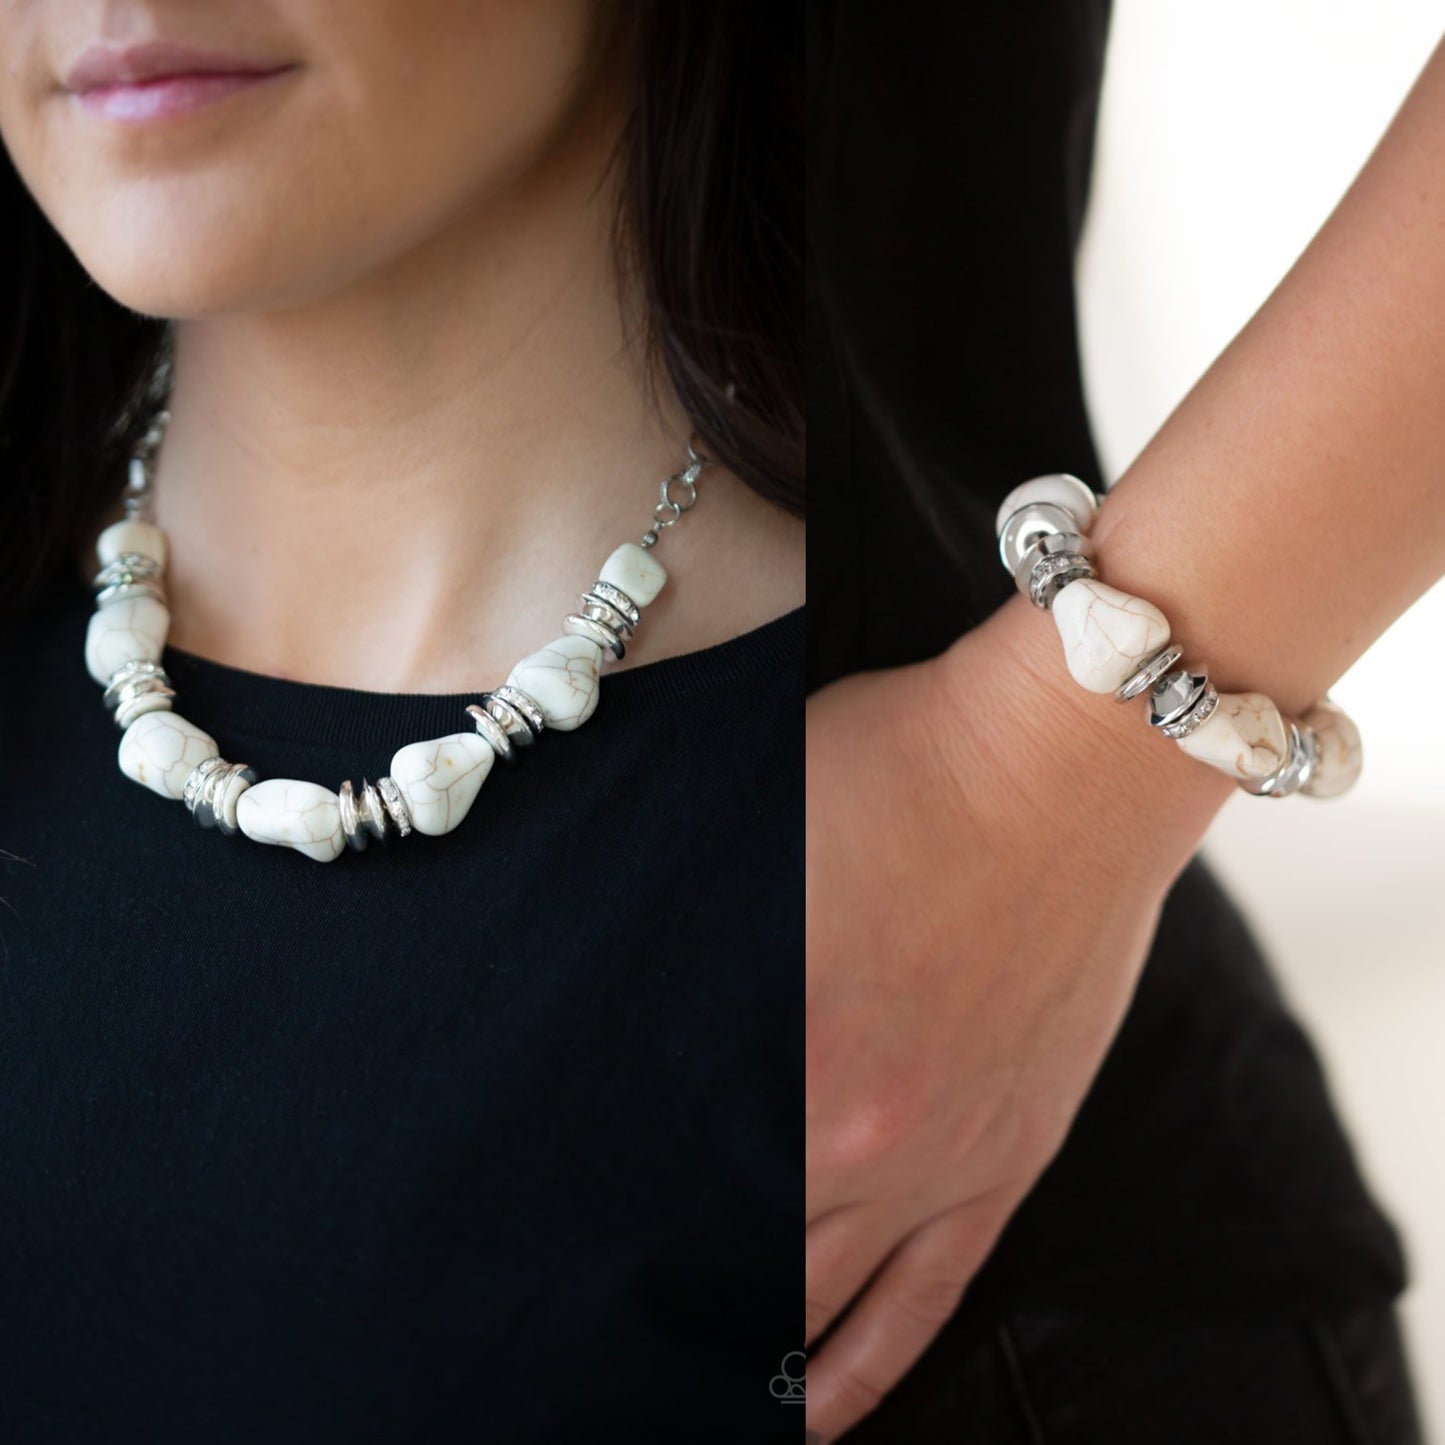 Stunningly Stone Age - White necklace w/ matching bracelet